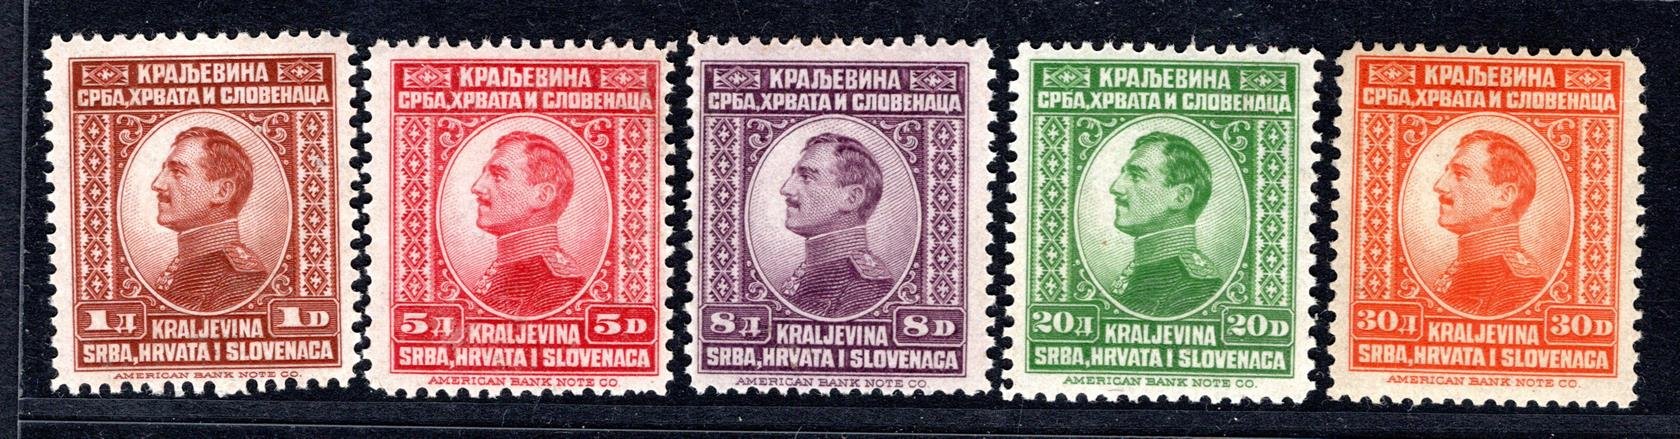 Jugoslavie - Mi. 169 - 73, koncovka s lepem